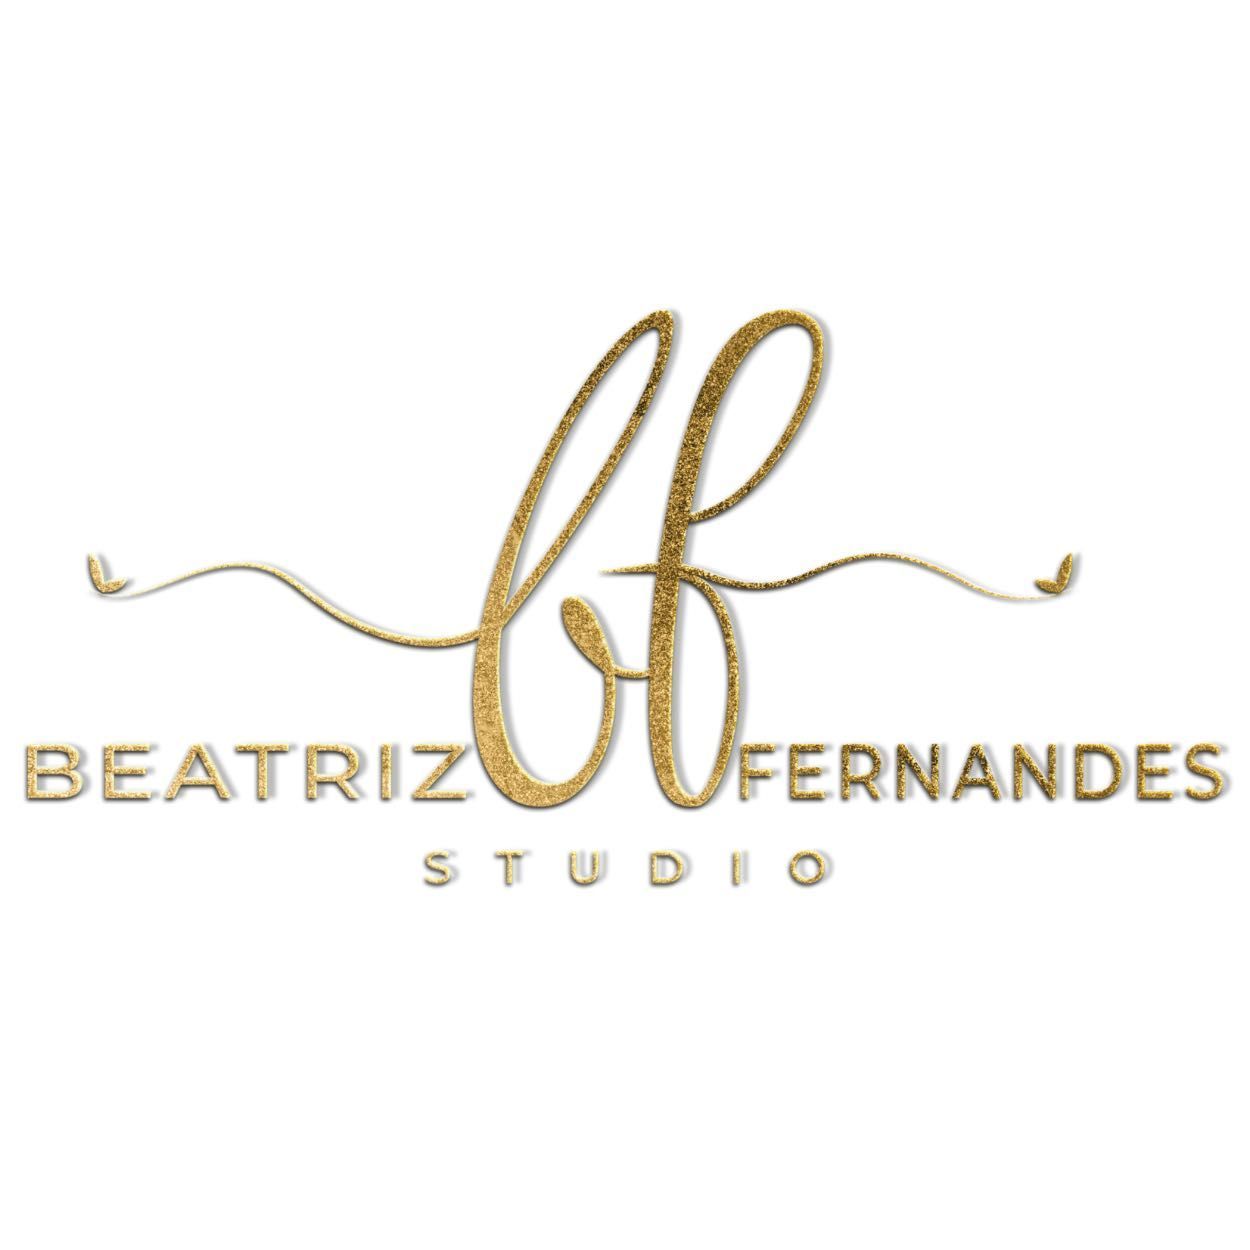 Beatrizfernandes_studio_, Rua do Carmo, 38, 3°Andar Frente, 9050-019, Funchal